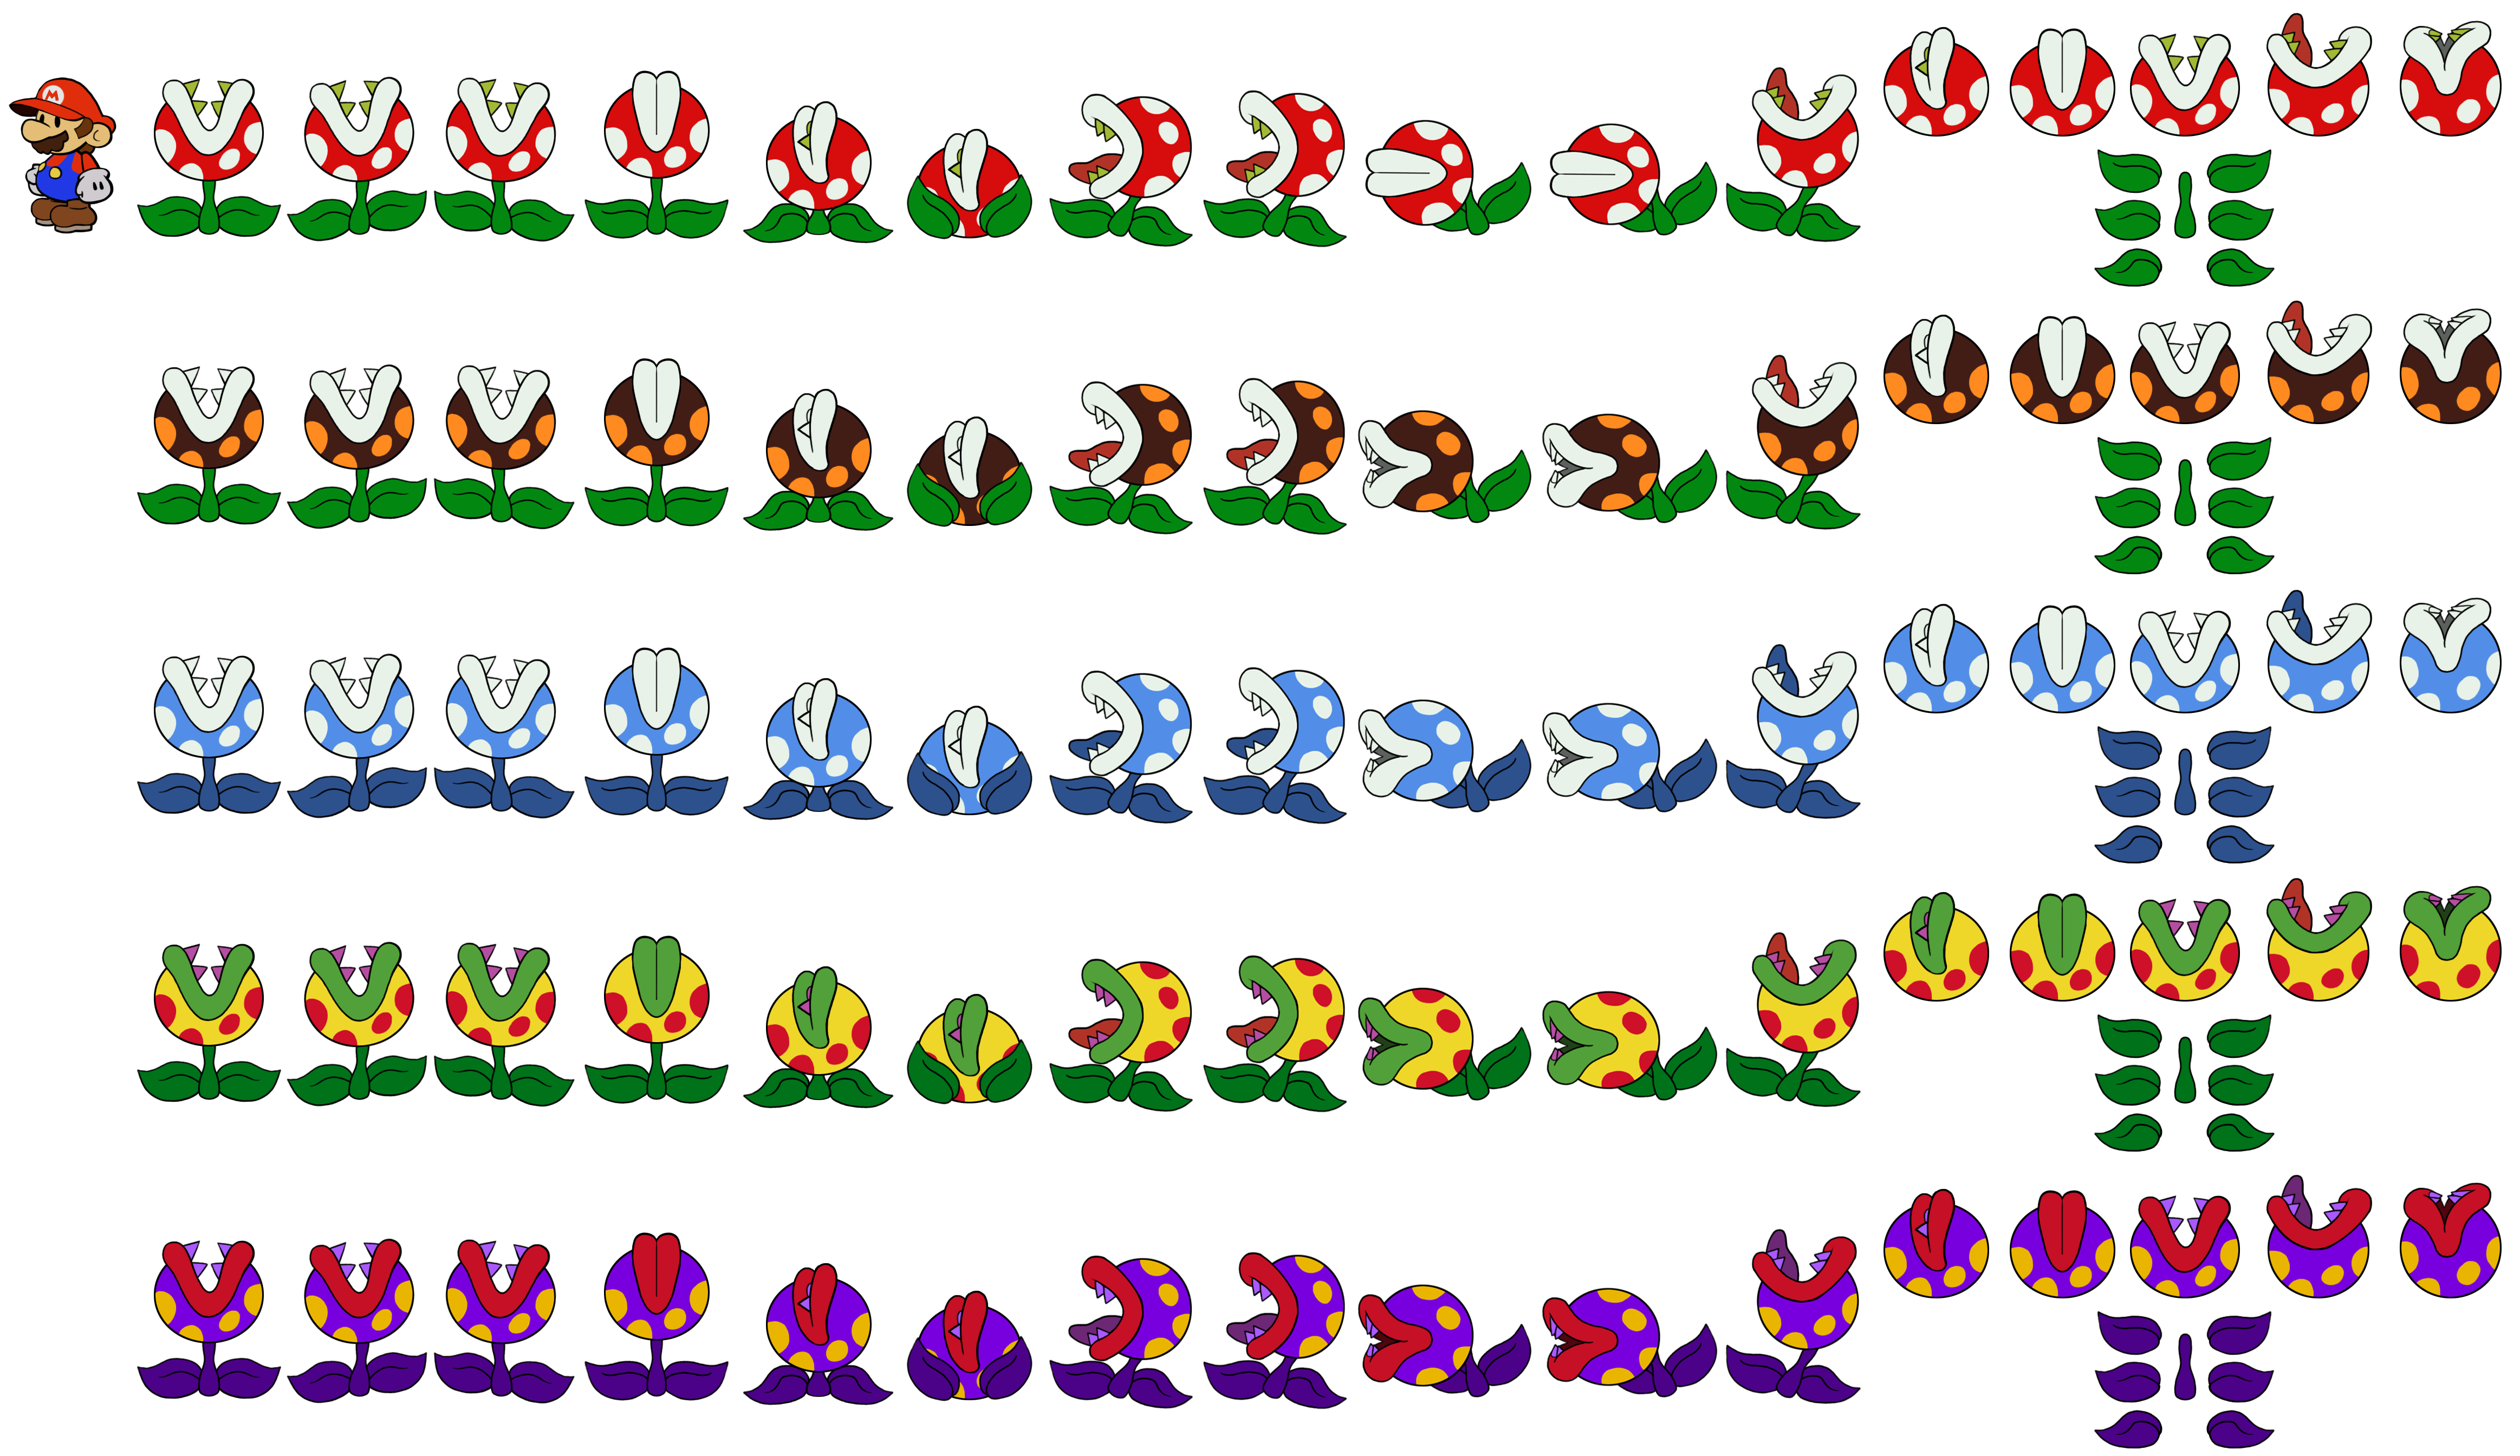 Mario Customs - Piranha Plants (Paper Mario-Style)